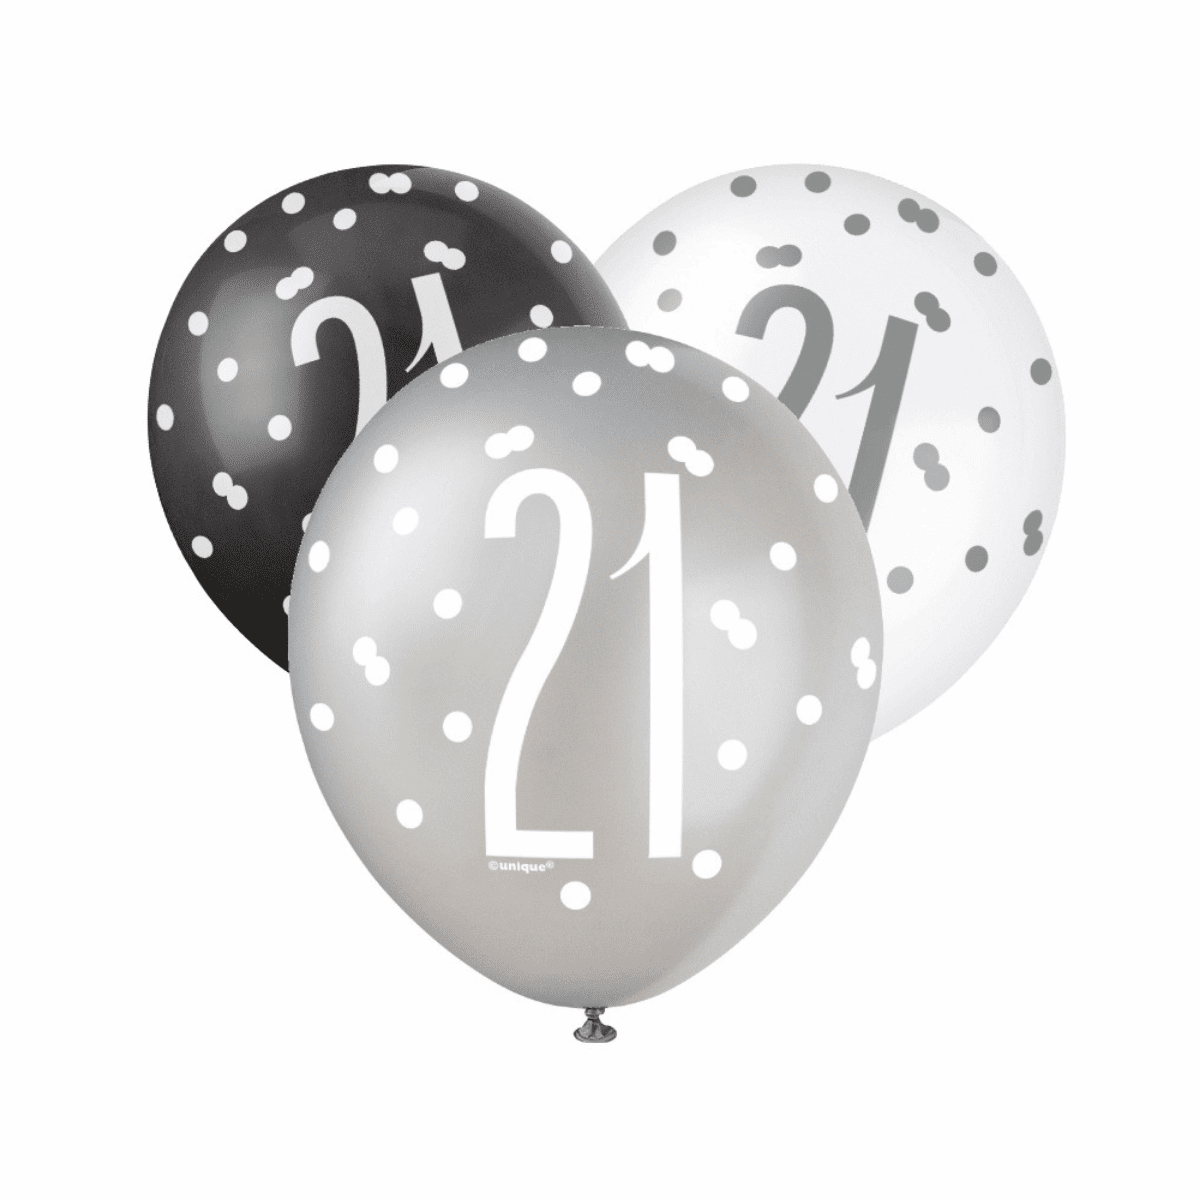 Black, Silver, & White Latex Balloons 21st